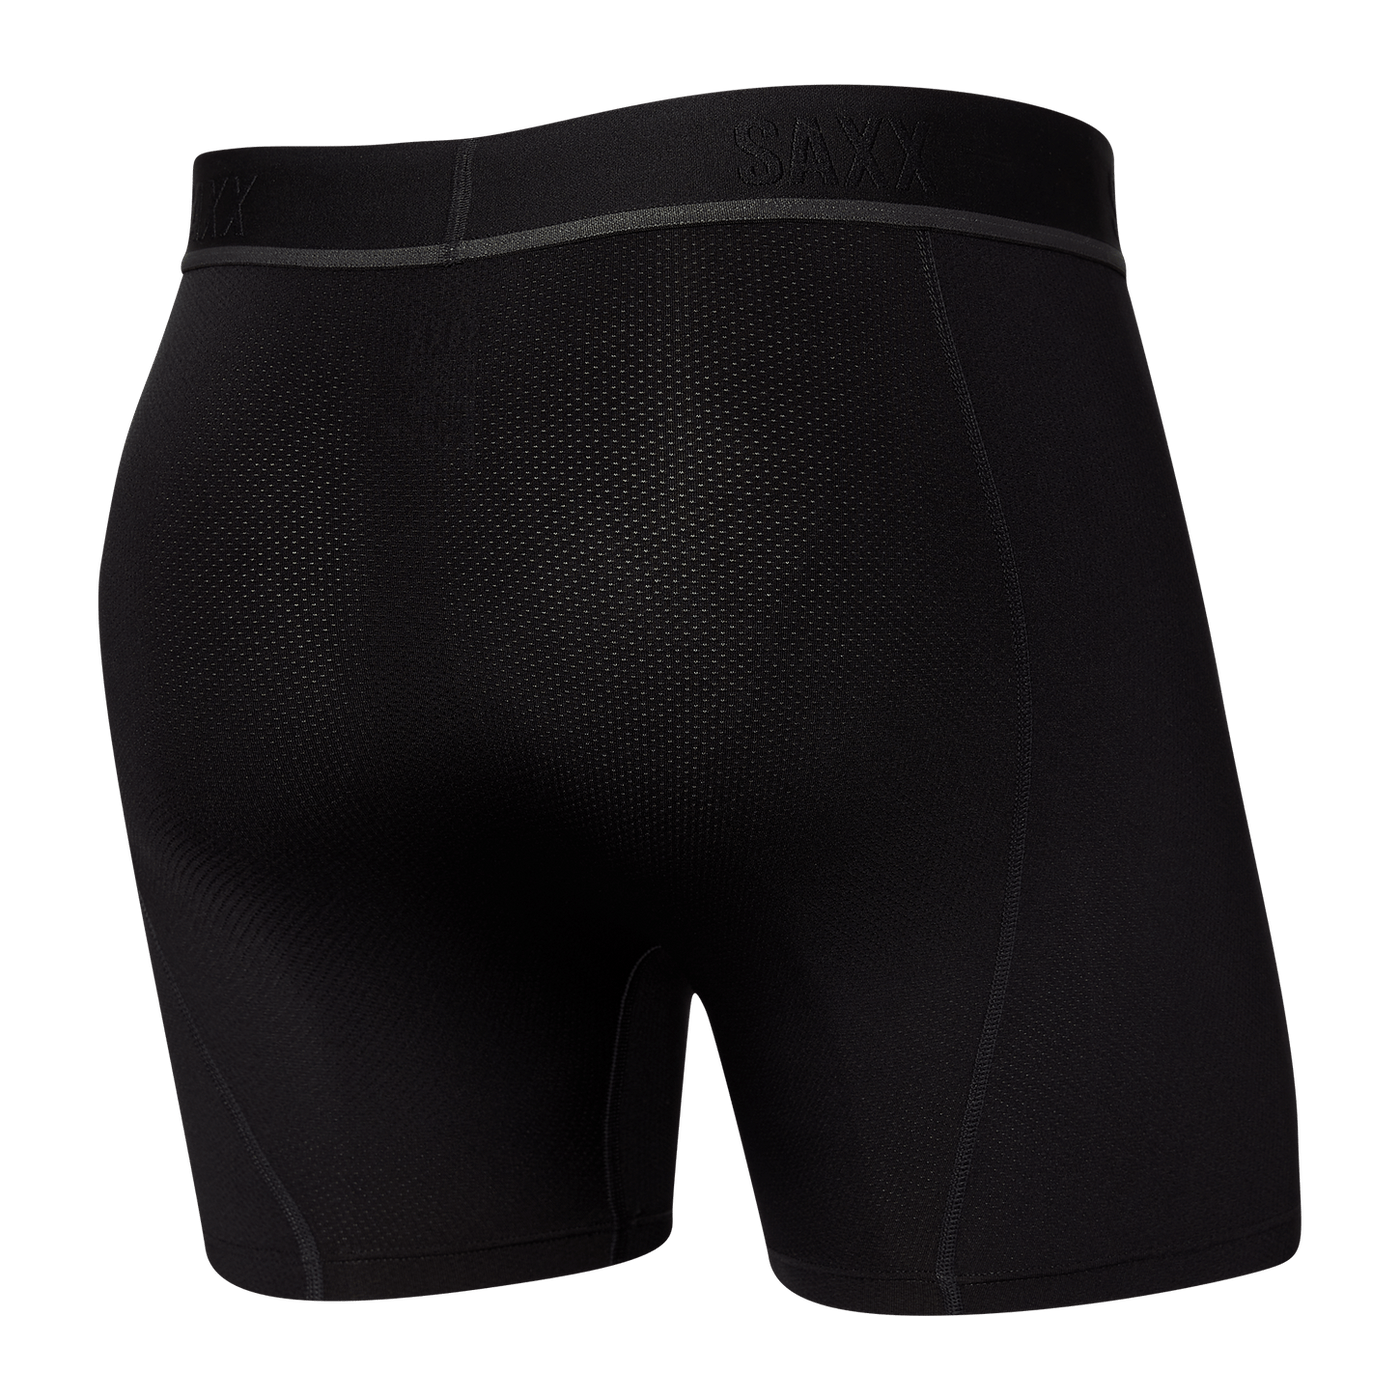 SAXX Men's Underwear Long Leg Boxer Briefs – KINETIC Light-Compression Mesh  Long Leg Boxer Briefs with Built-in Pouch Support